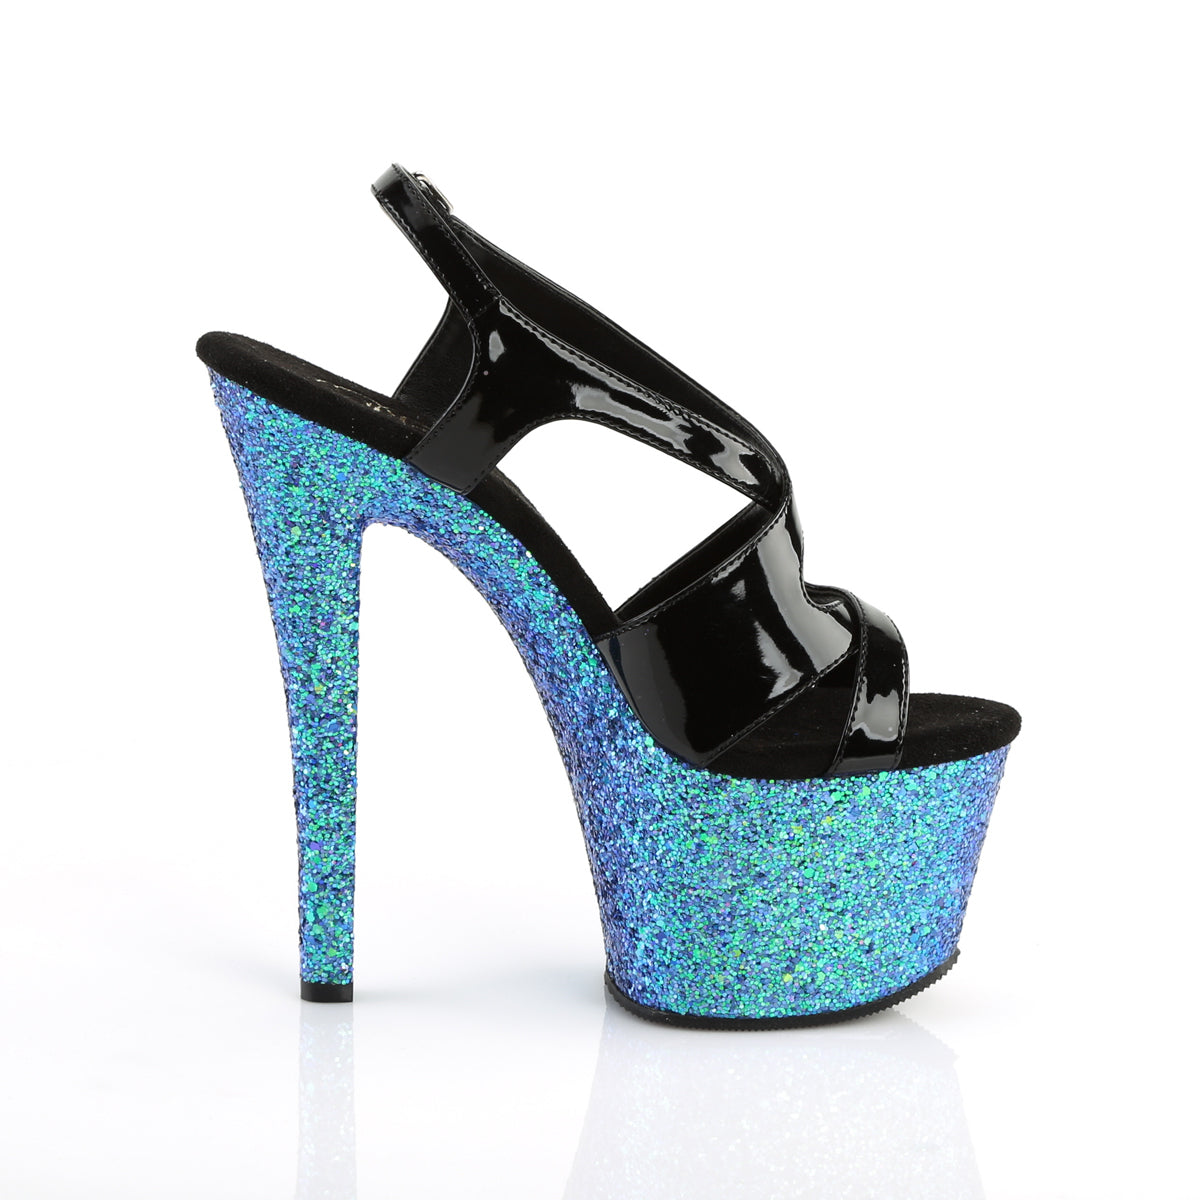 Pleaser Sandales pour femmes SKY-330LG BLK PAT / Bleu Multi Glitter